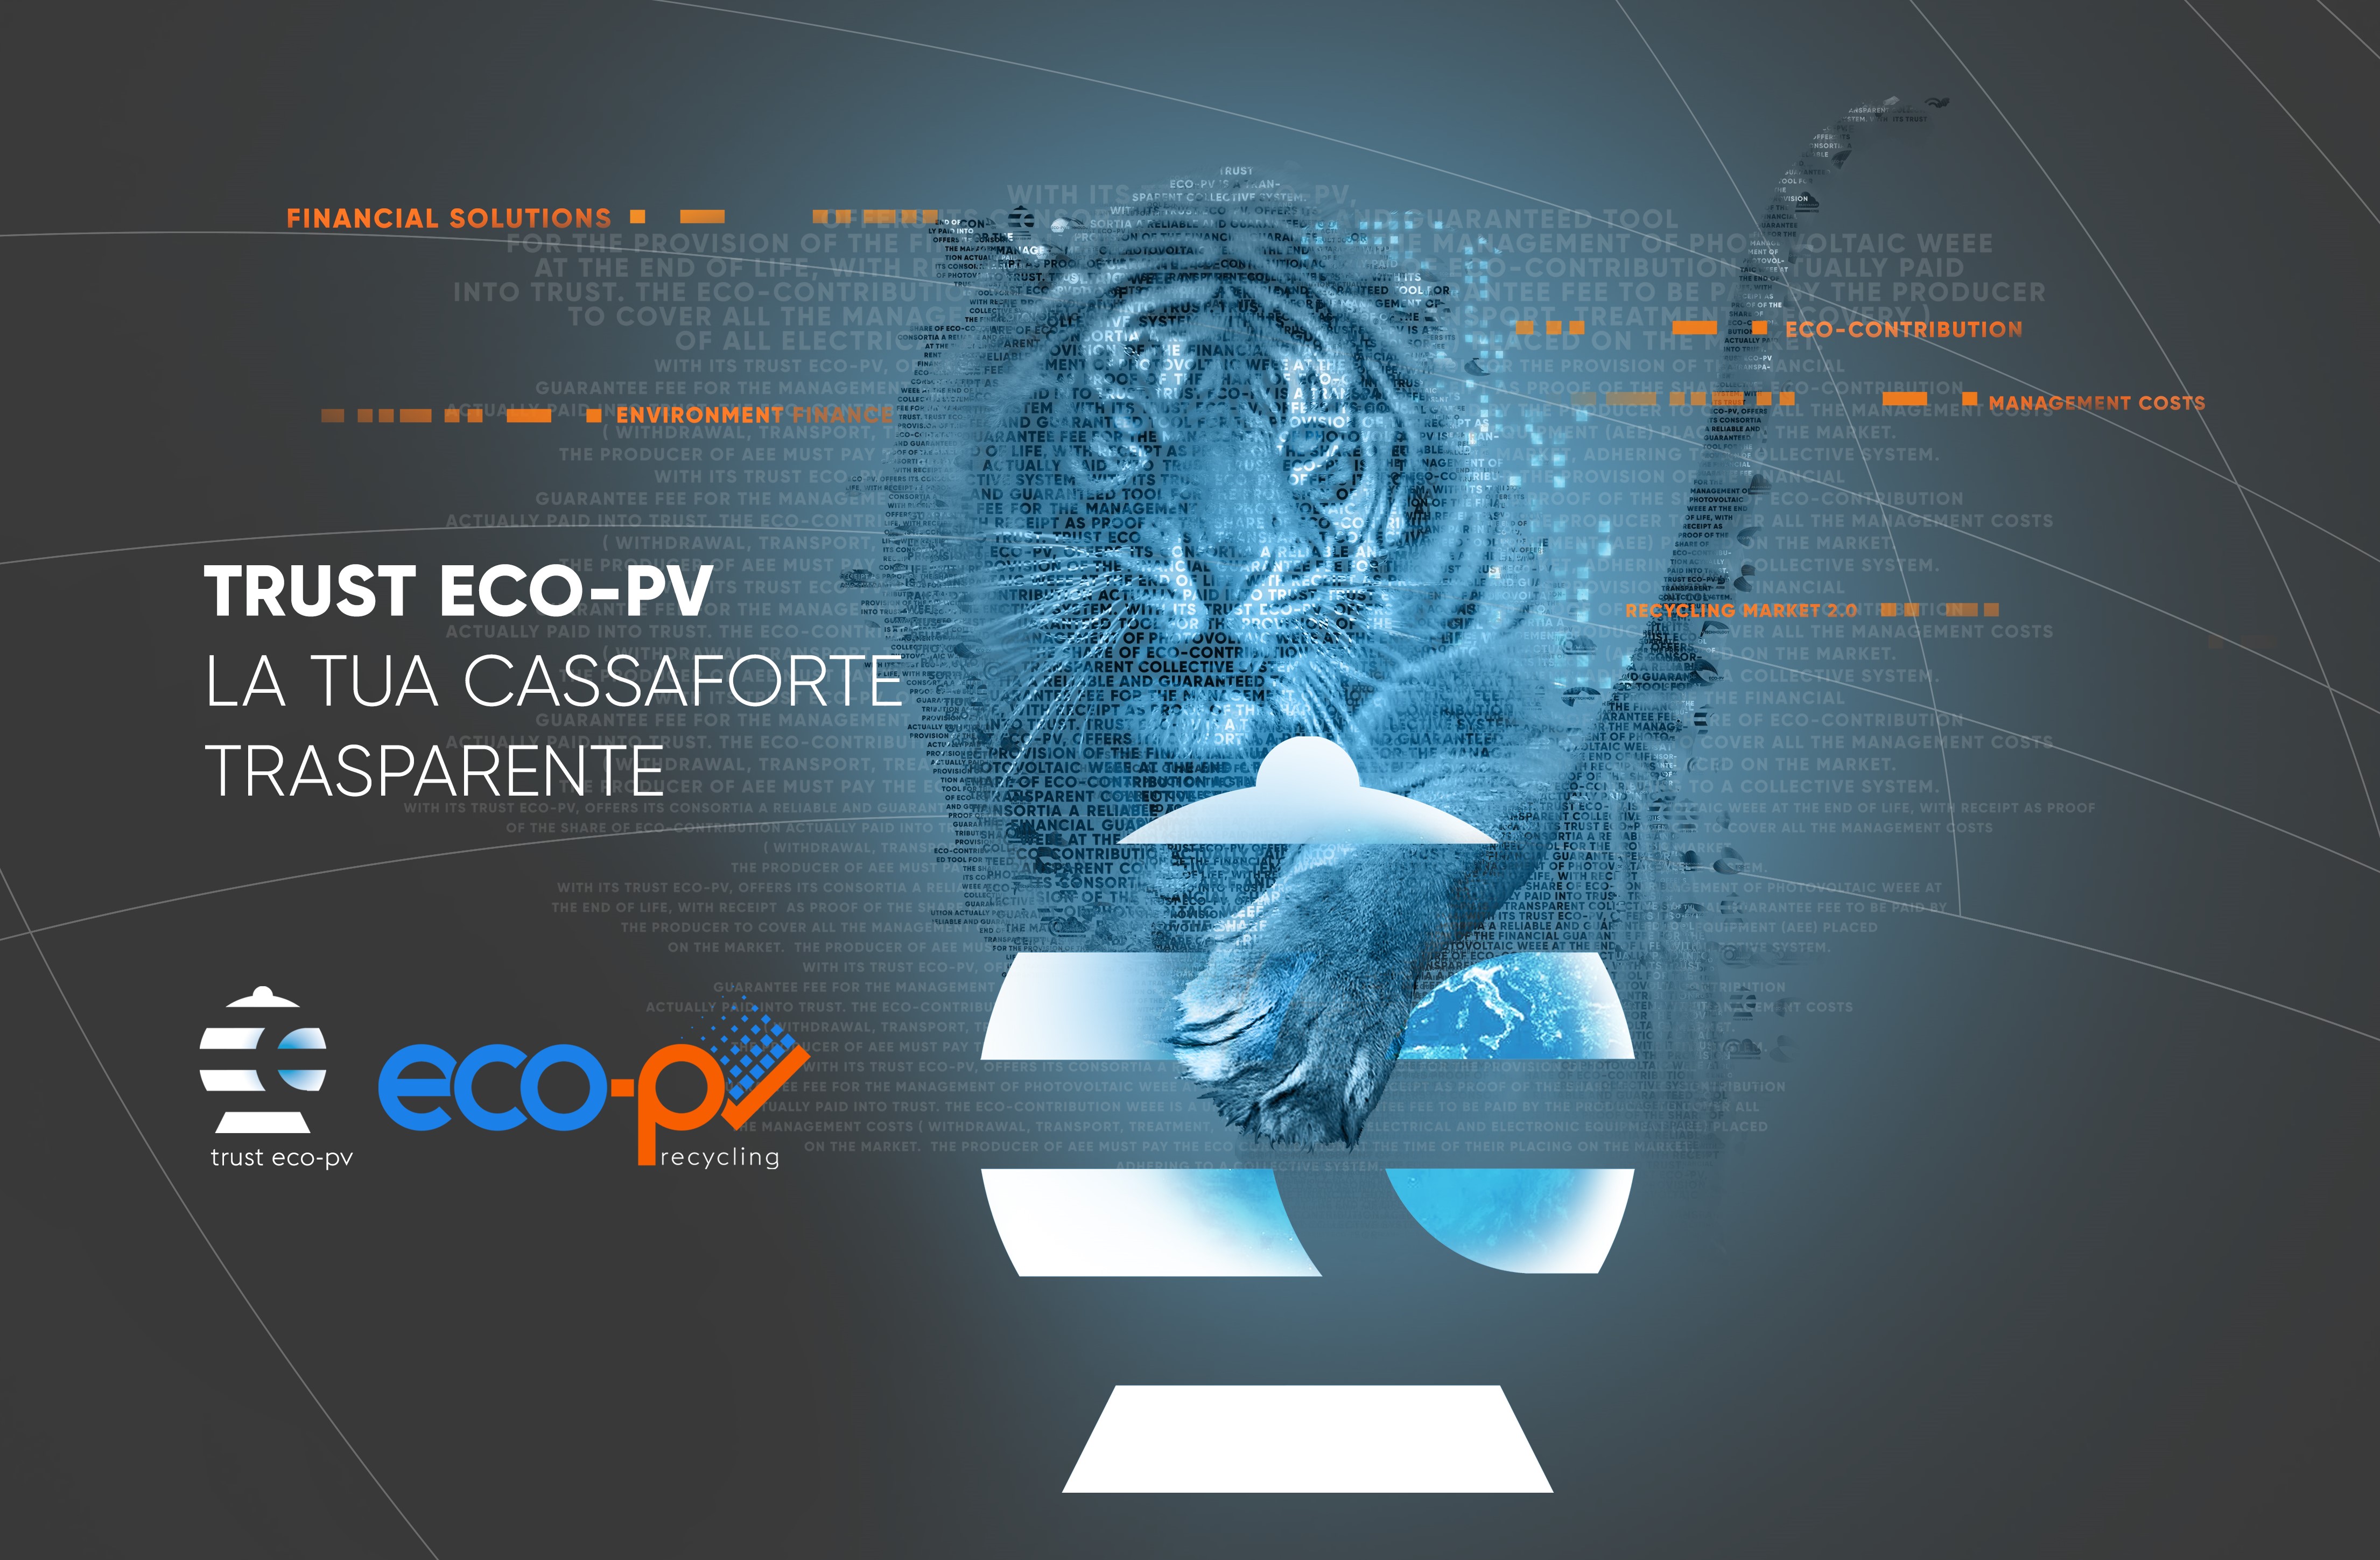 trust eco-pv home page design 2021